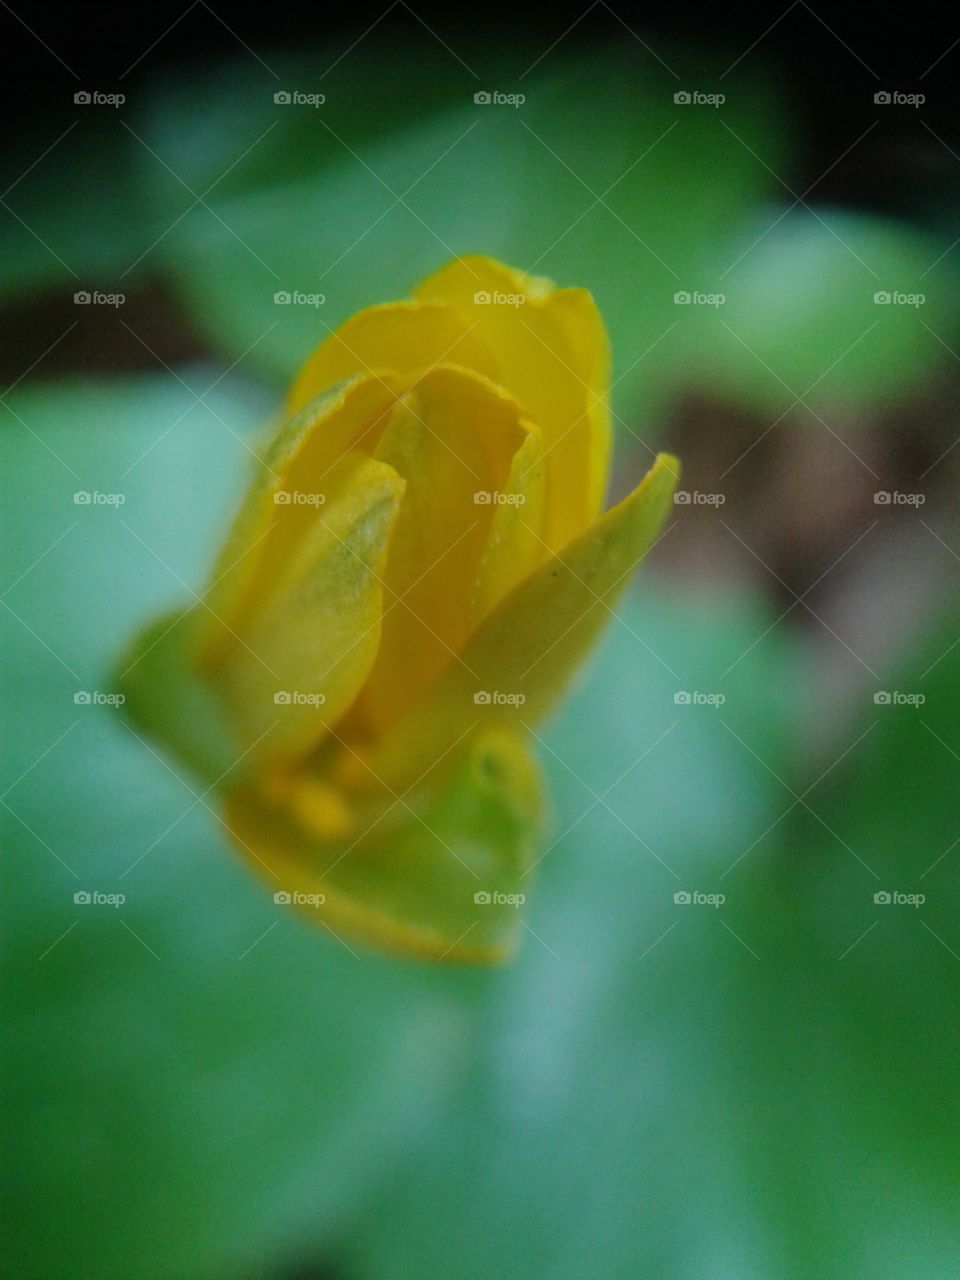 Small Yellow Flower